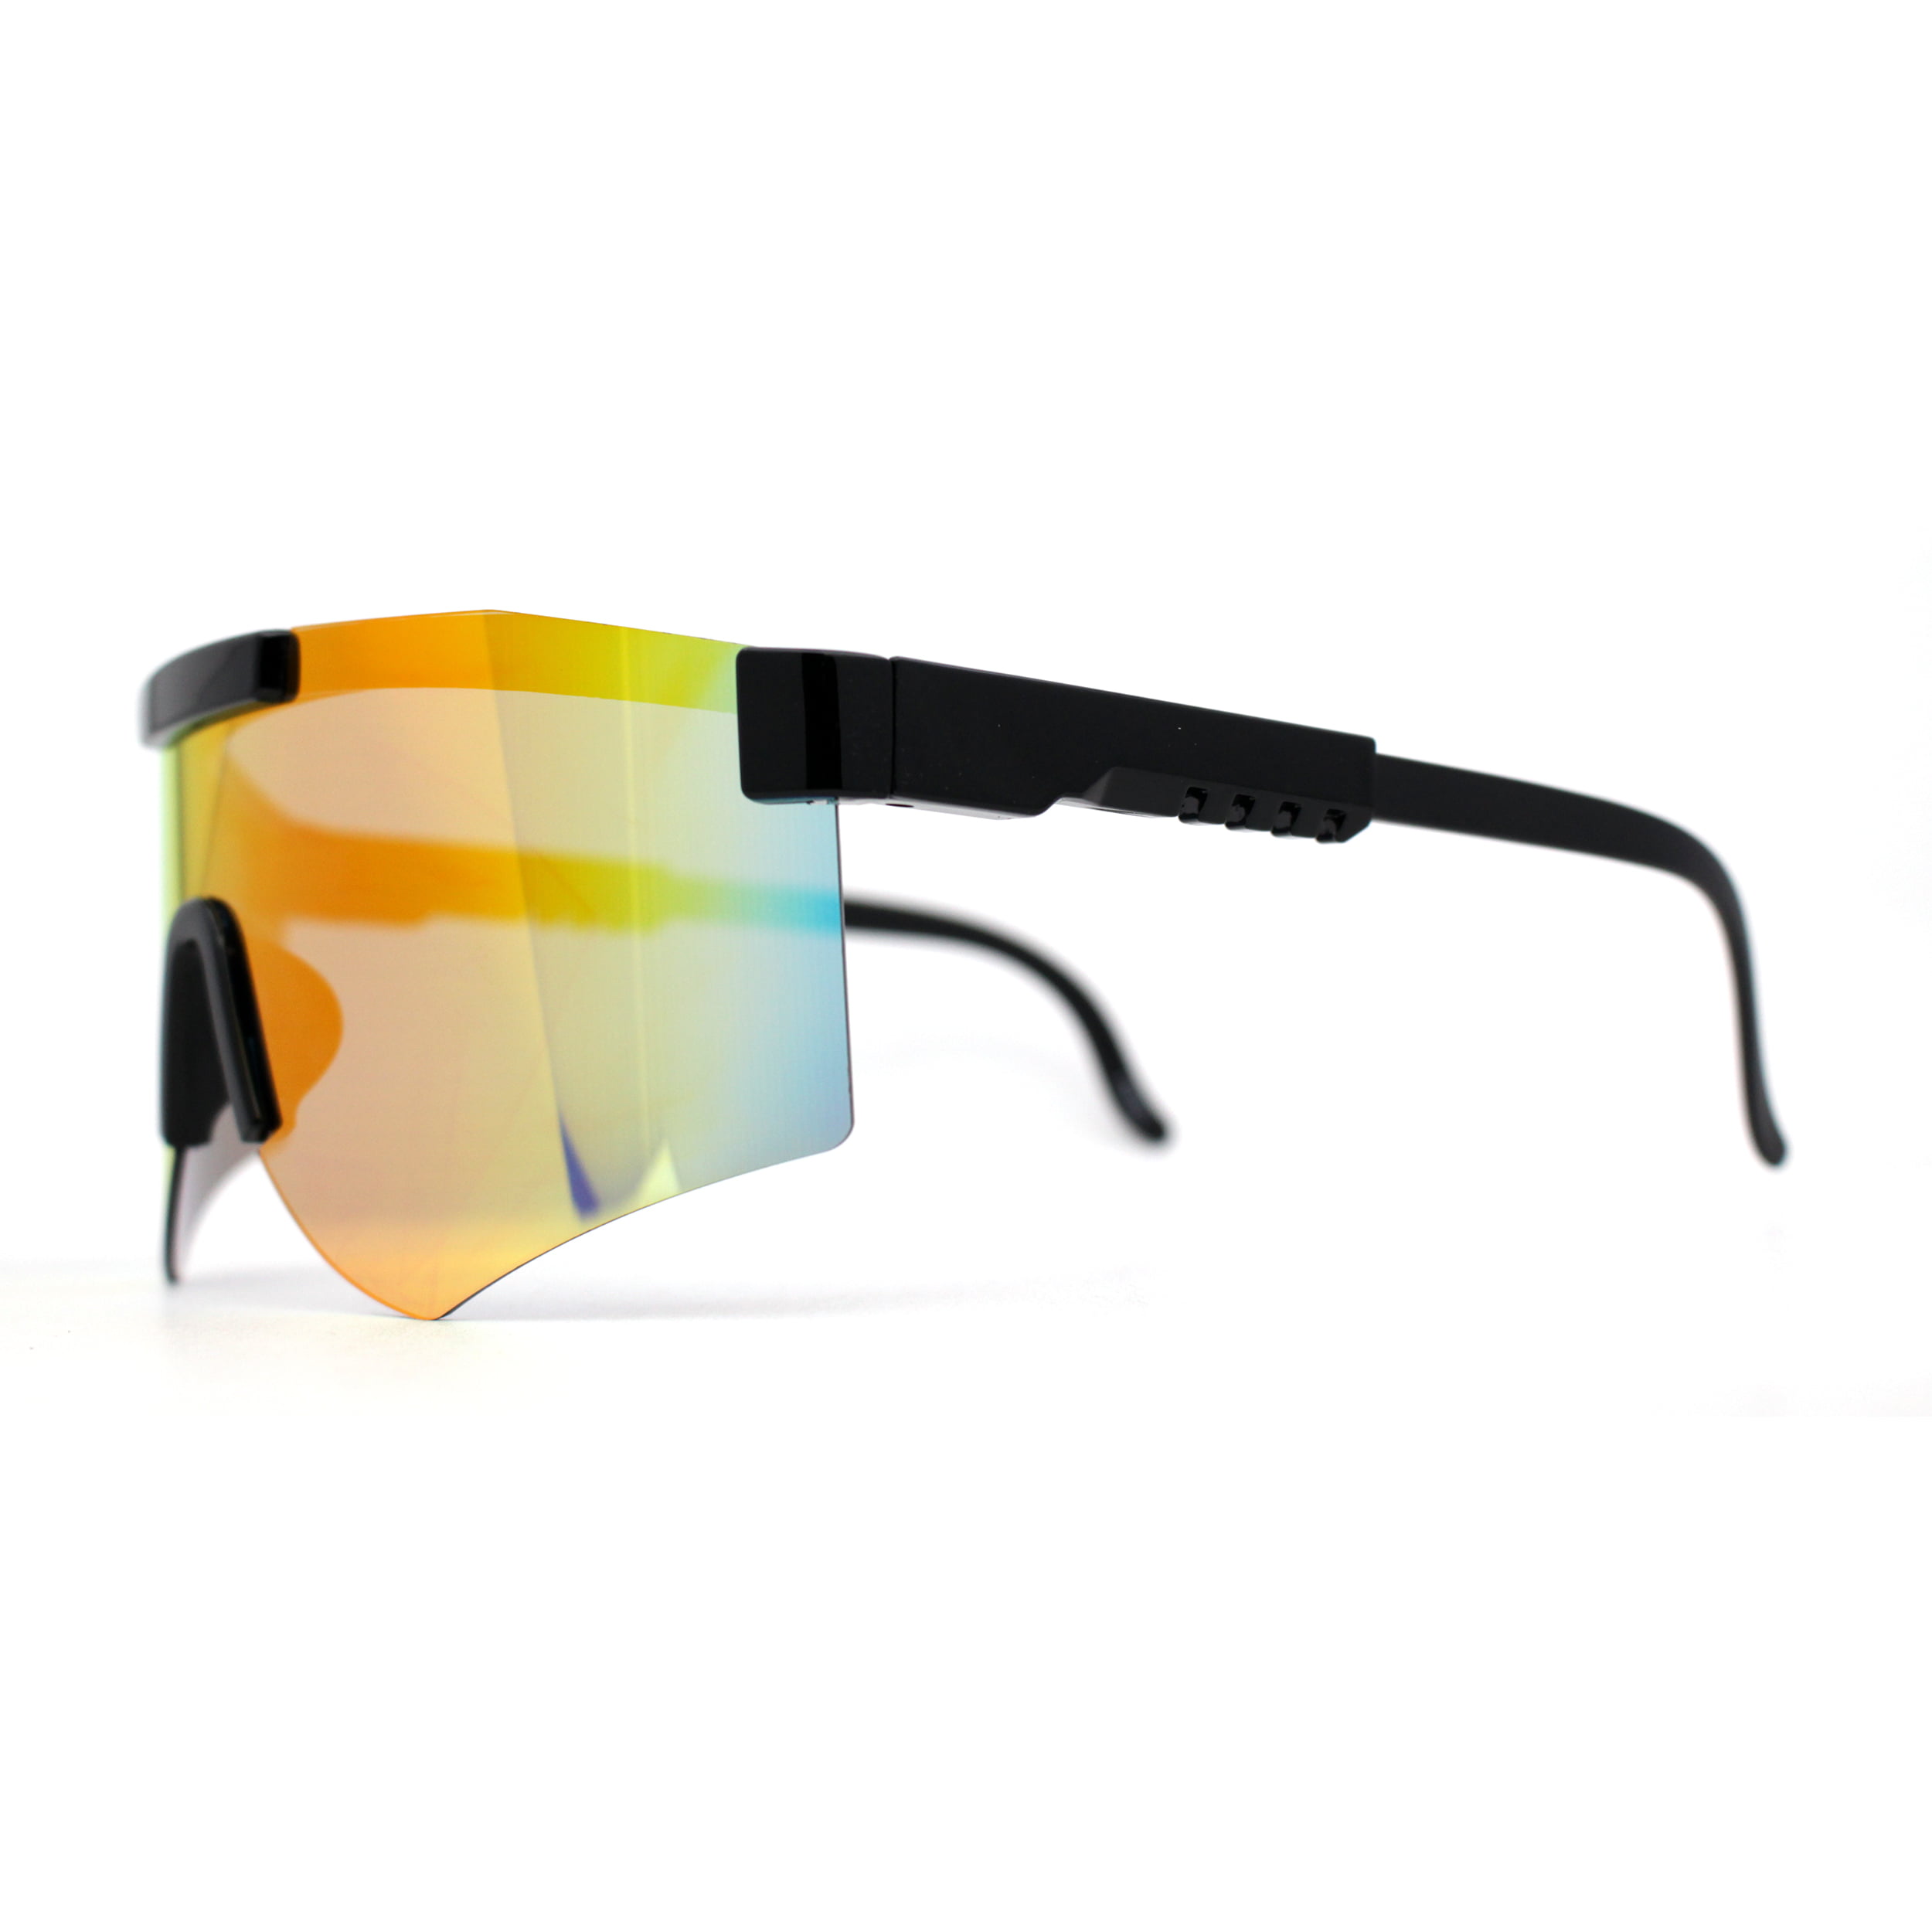 All Sunglasses Monoblock Arms Mirror Shield Cyberpunk Rainbow Adjustable Futuristic Black